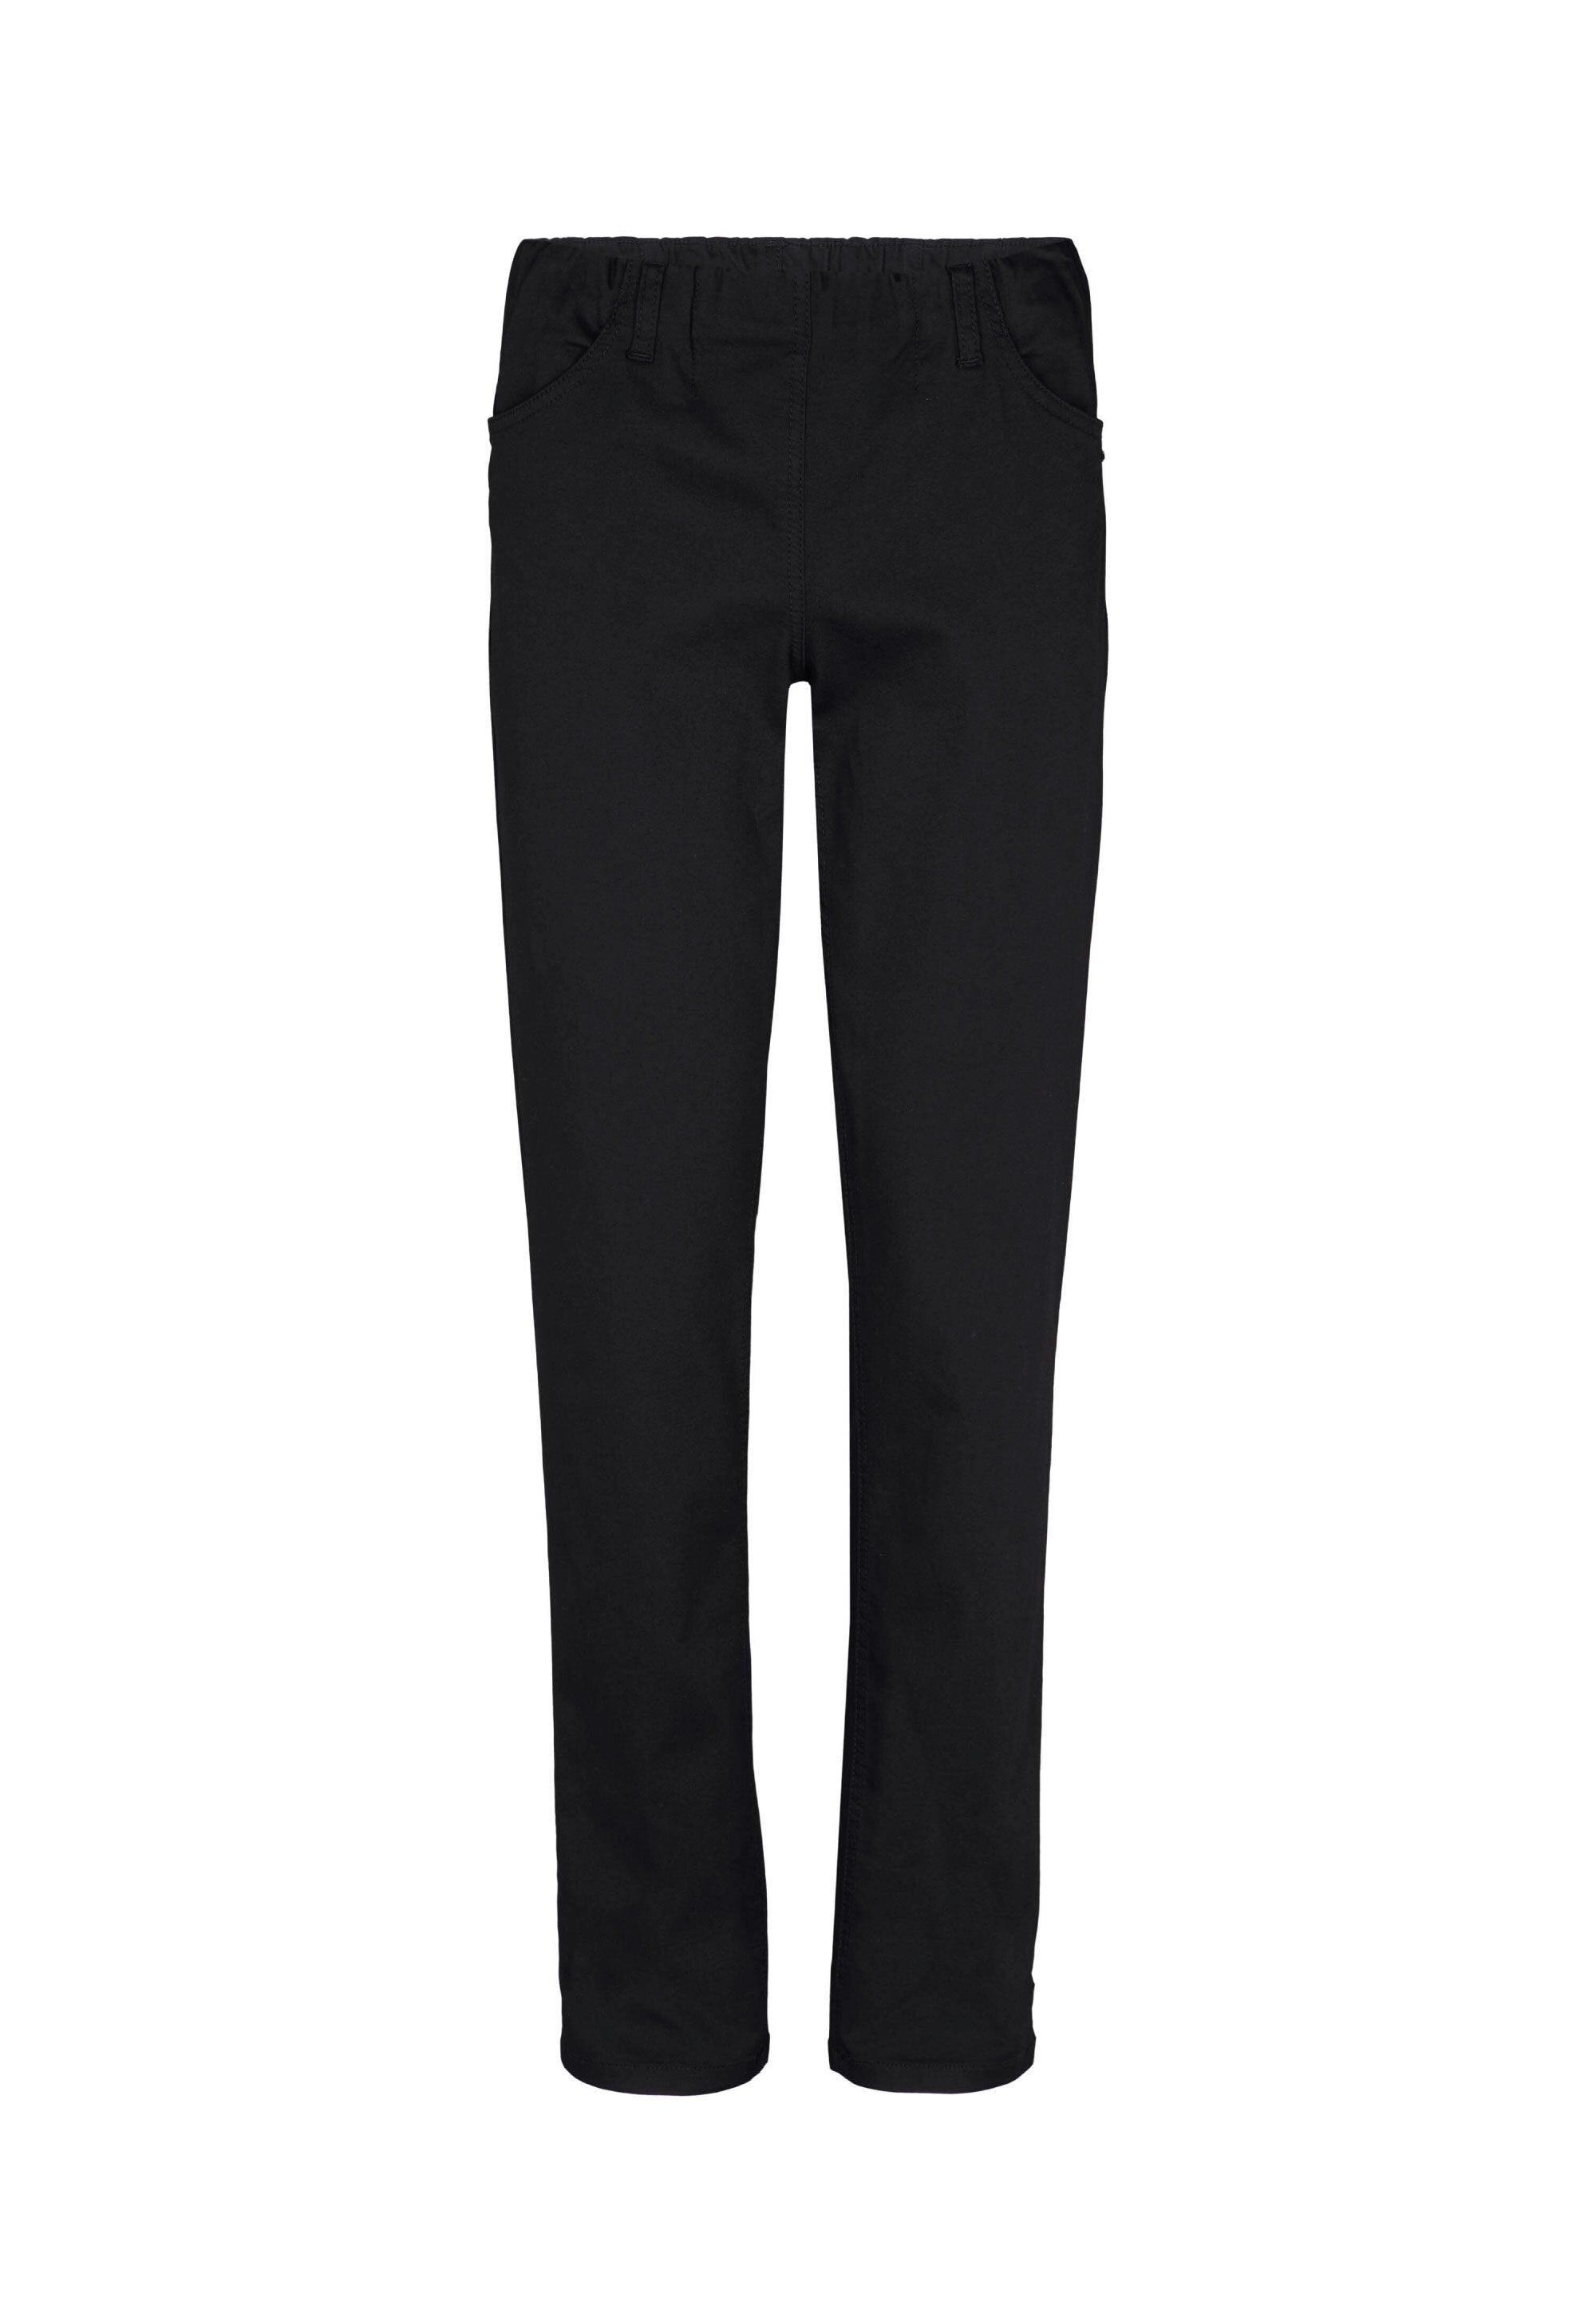 LAURIE Kelly Regular - Medium Length Trousers REGULAR 99000 Black